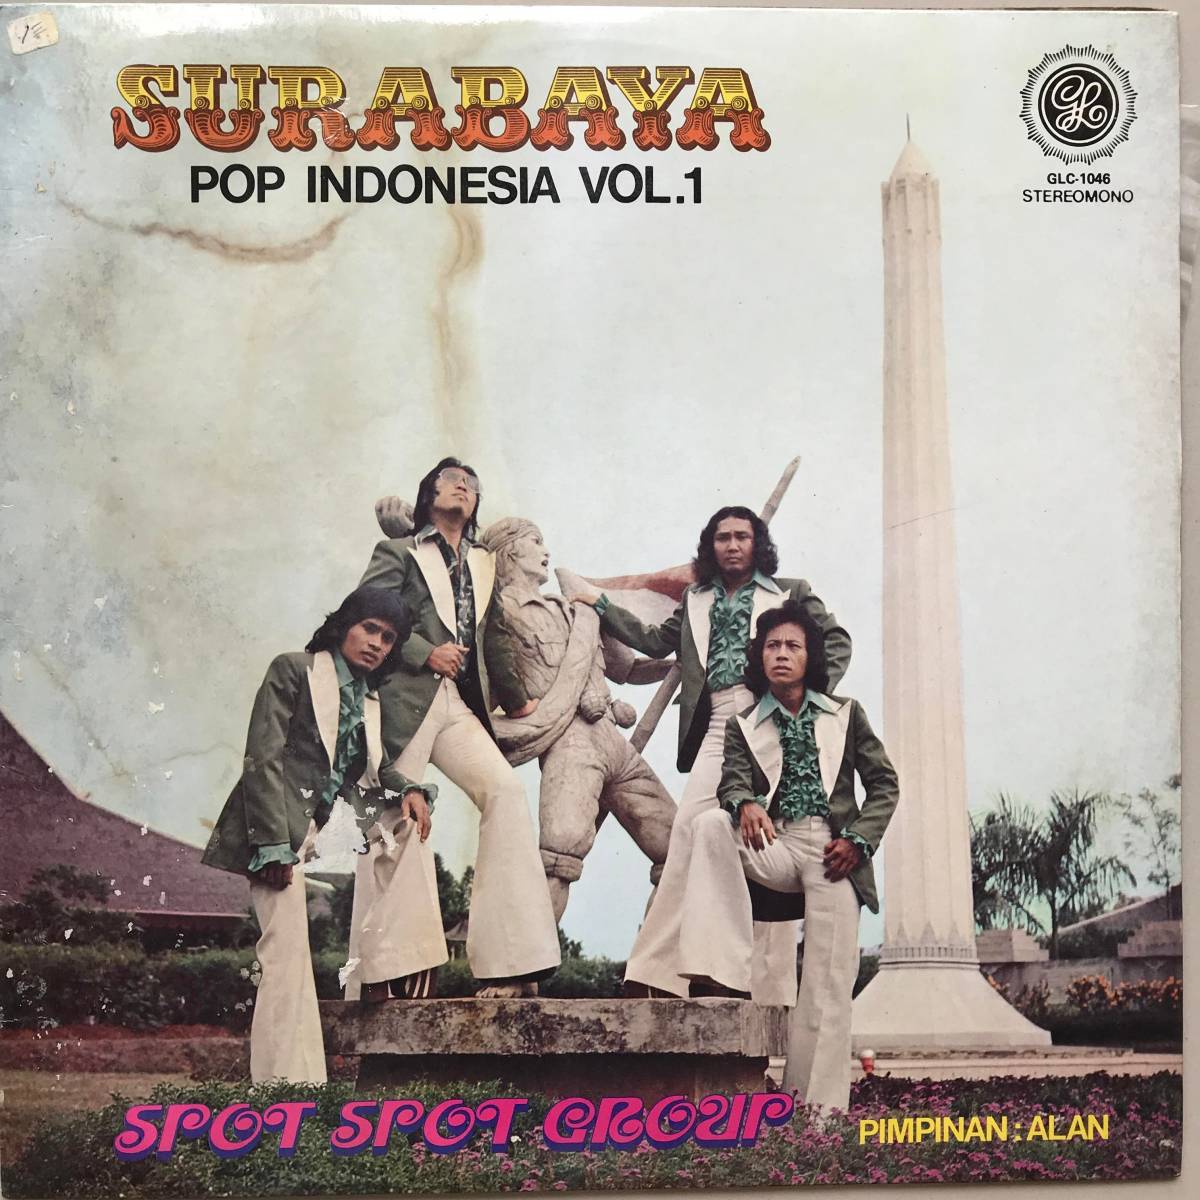 LP Indonesia「 Spot Spot Group 」Tropical Island Psych Rock Garage Pop スラバヤ 70's インドネシア レア盤の画像1